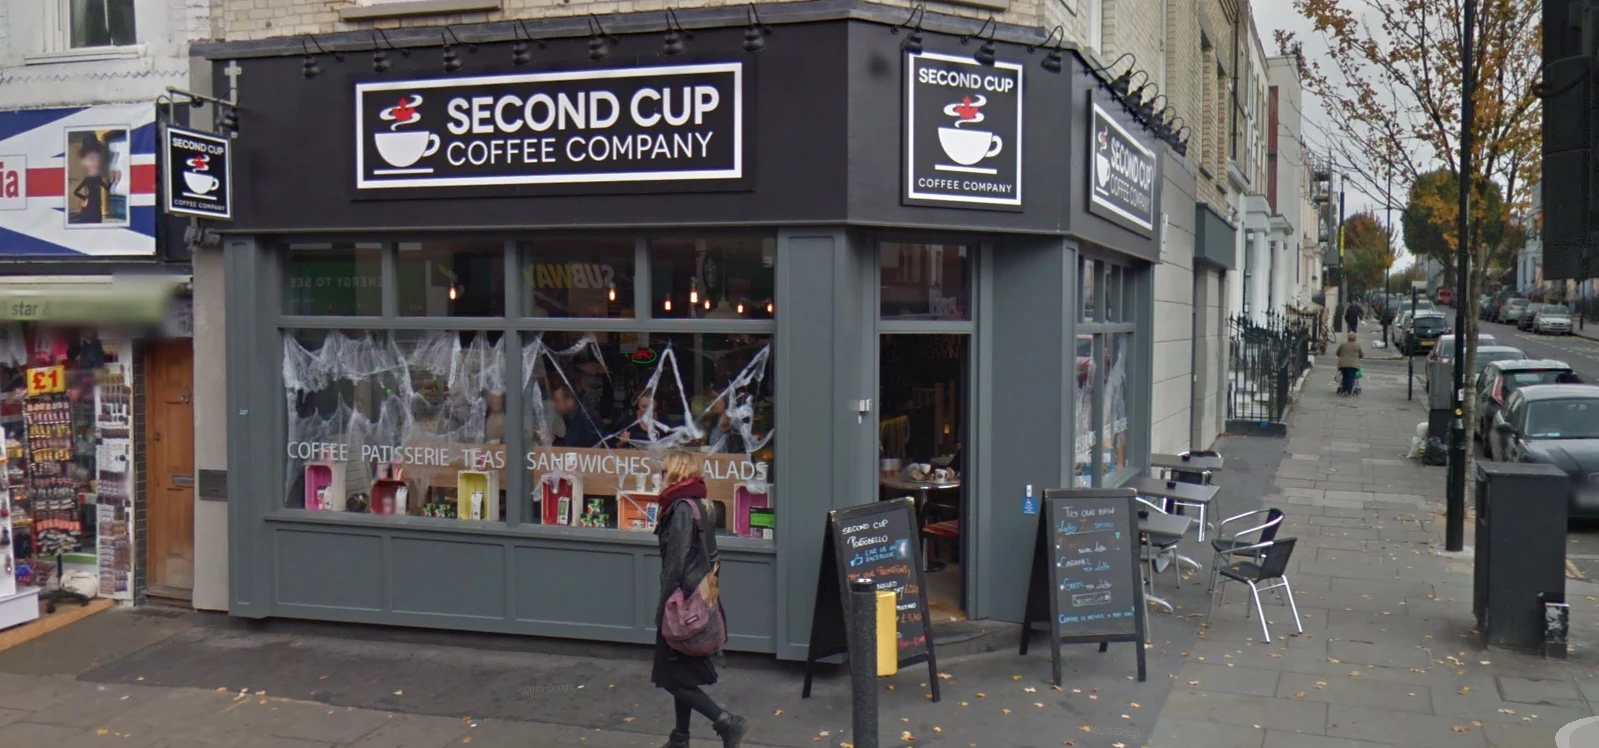 The Portobello Road branch of Second Cup Coffee. Image: Google Maps